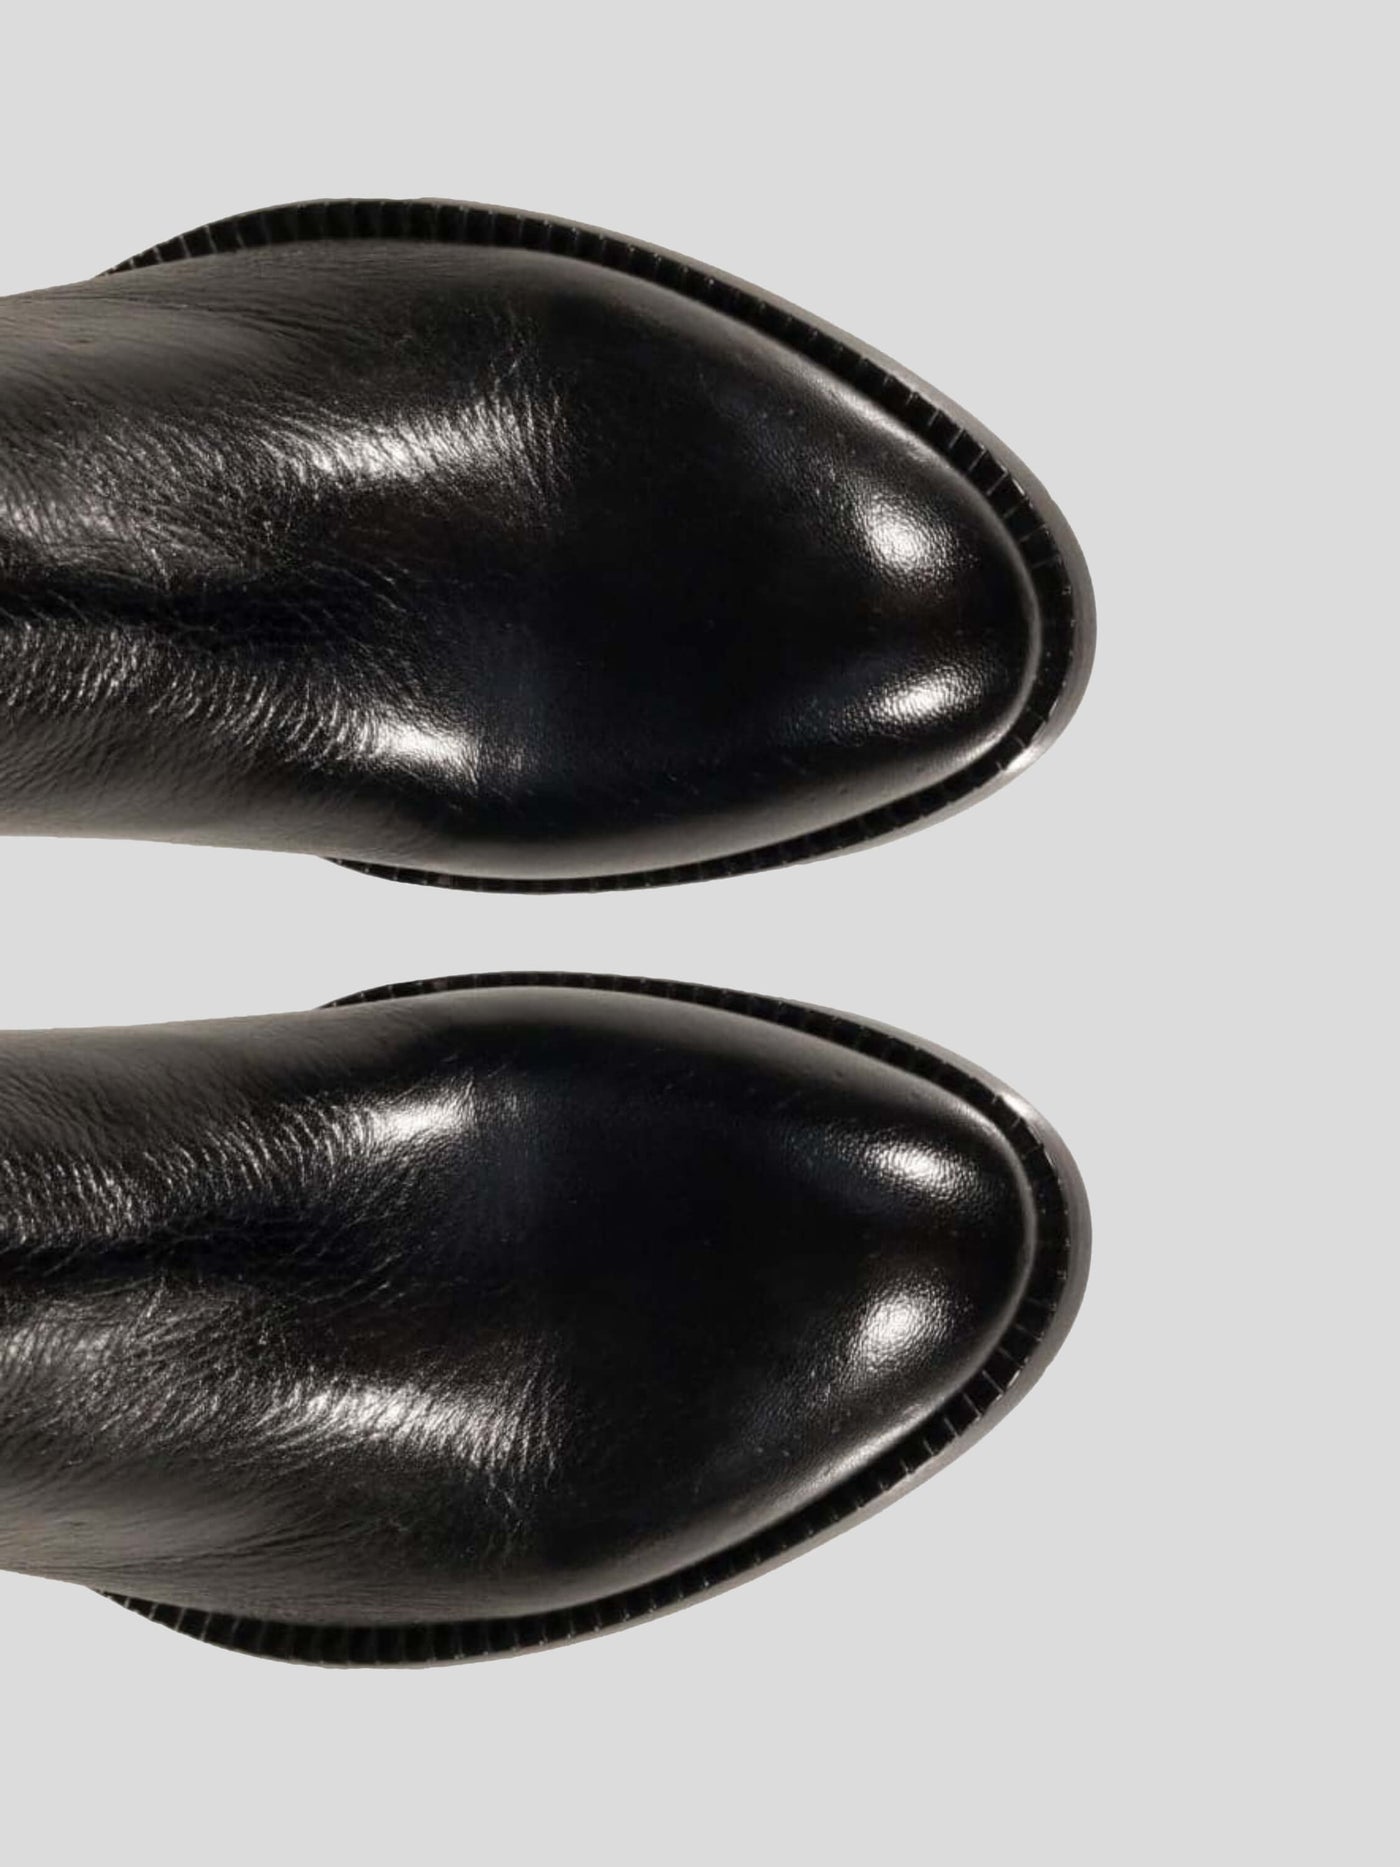 Rocco P. Stiefel & Boots | Zip-Stiefelette genarbtes Leder schwarz | 15650 black / ADAM/EVE